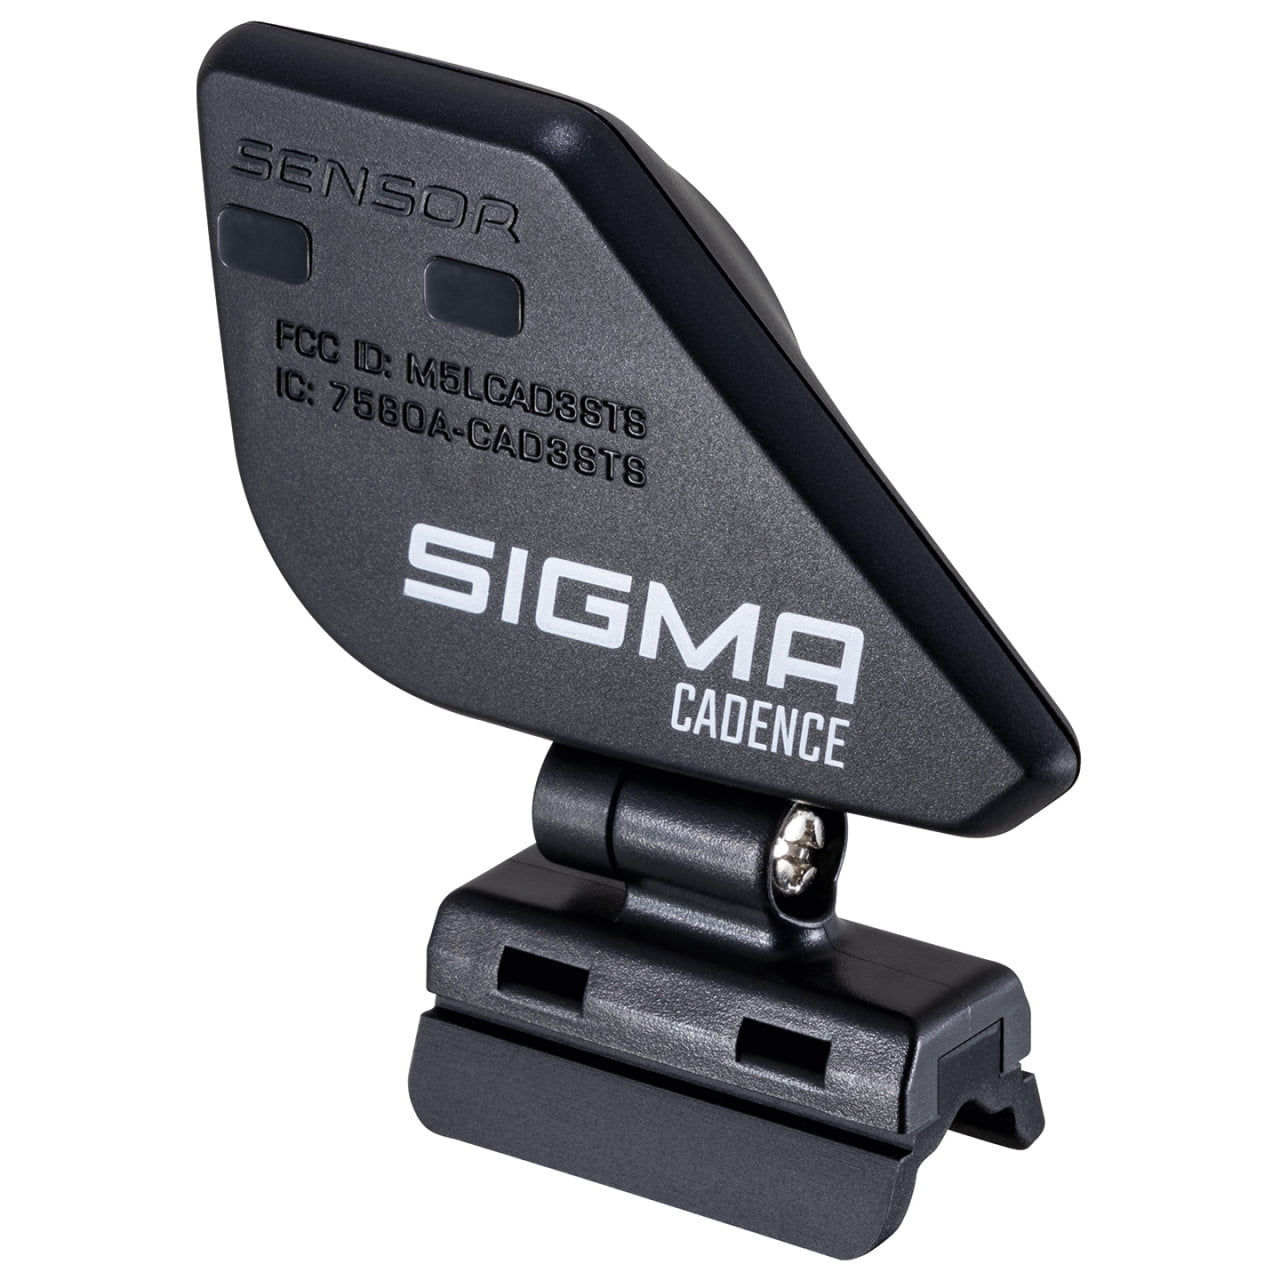 SIGMA CAD STS Cadence Meter Kit